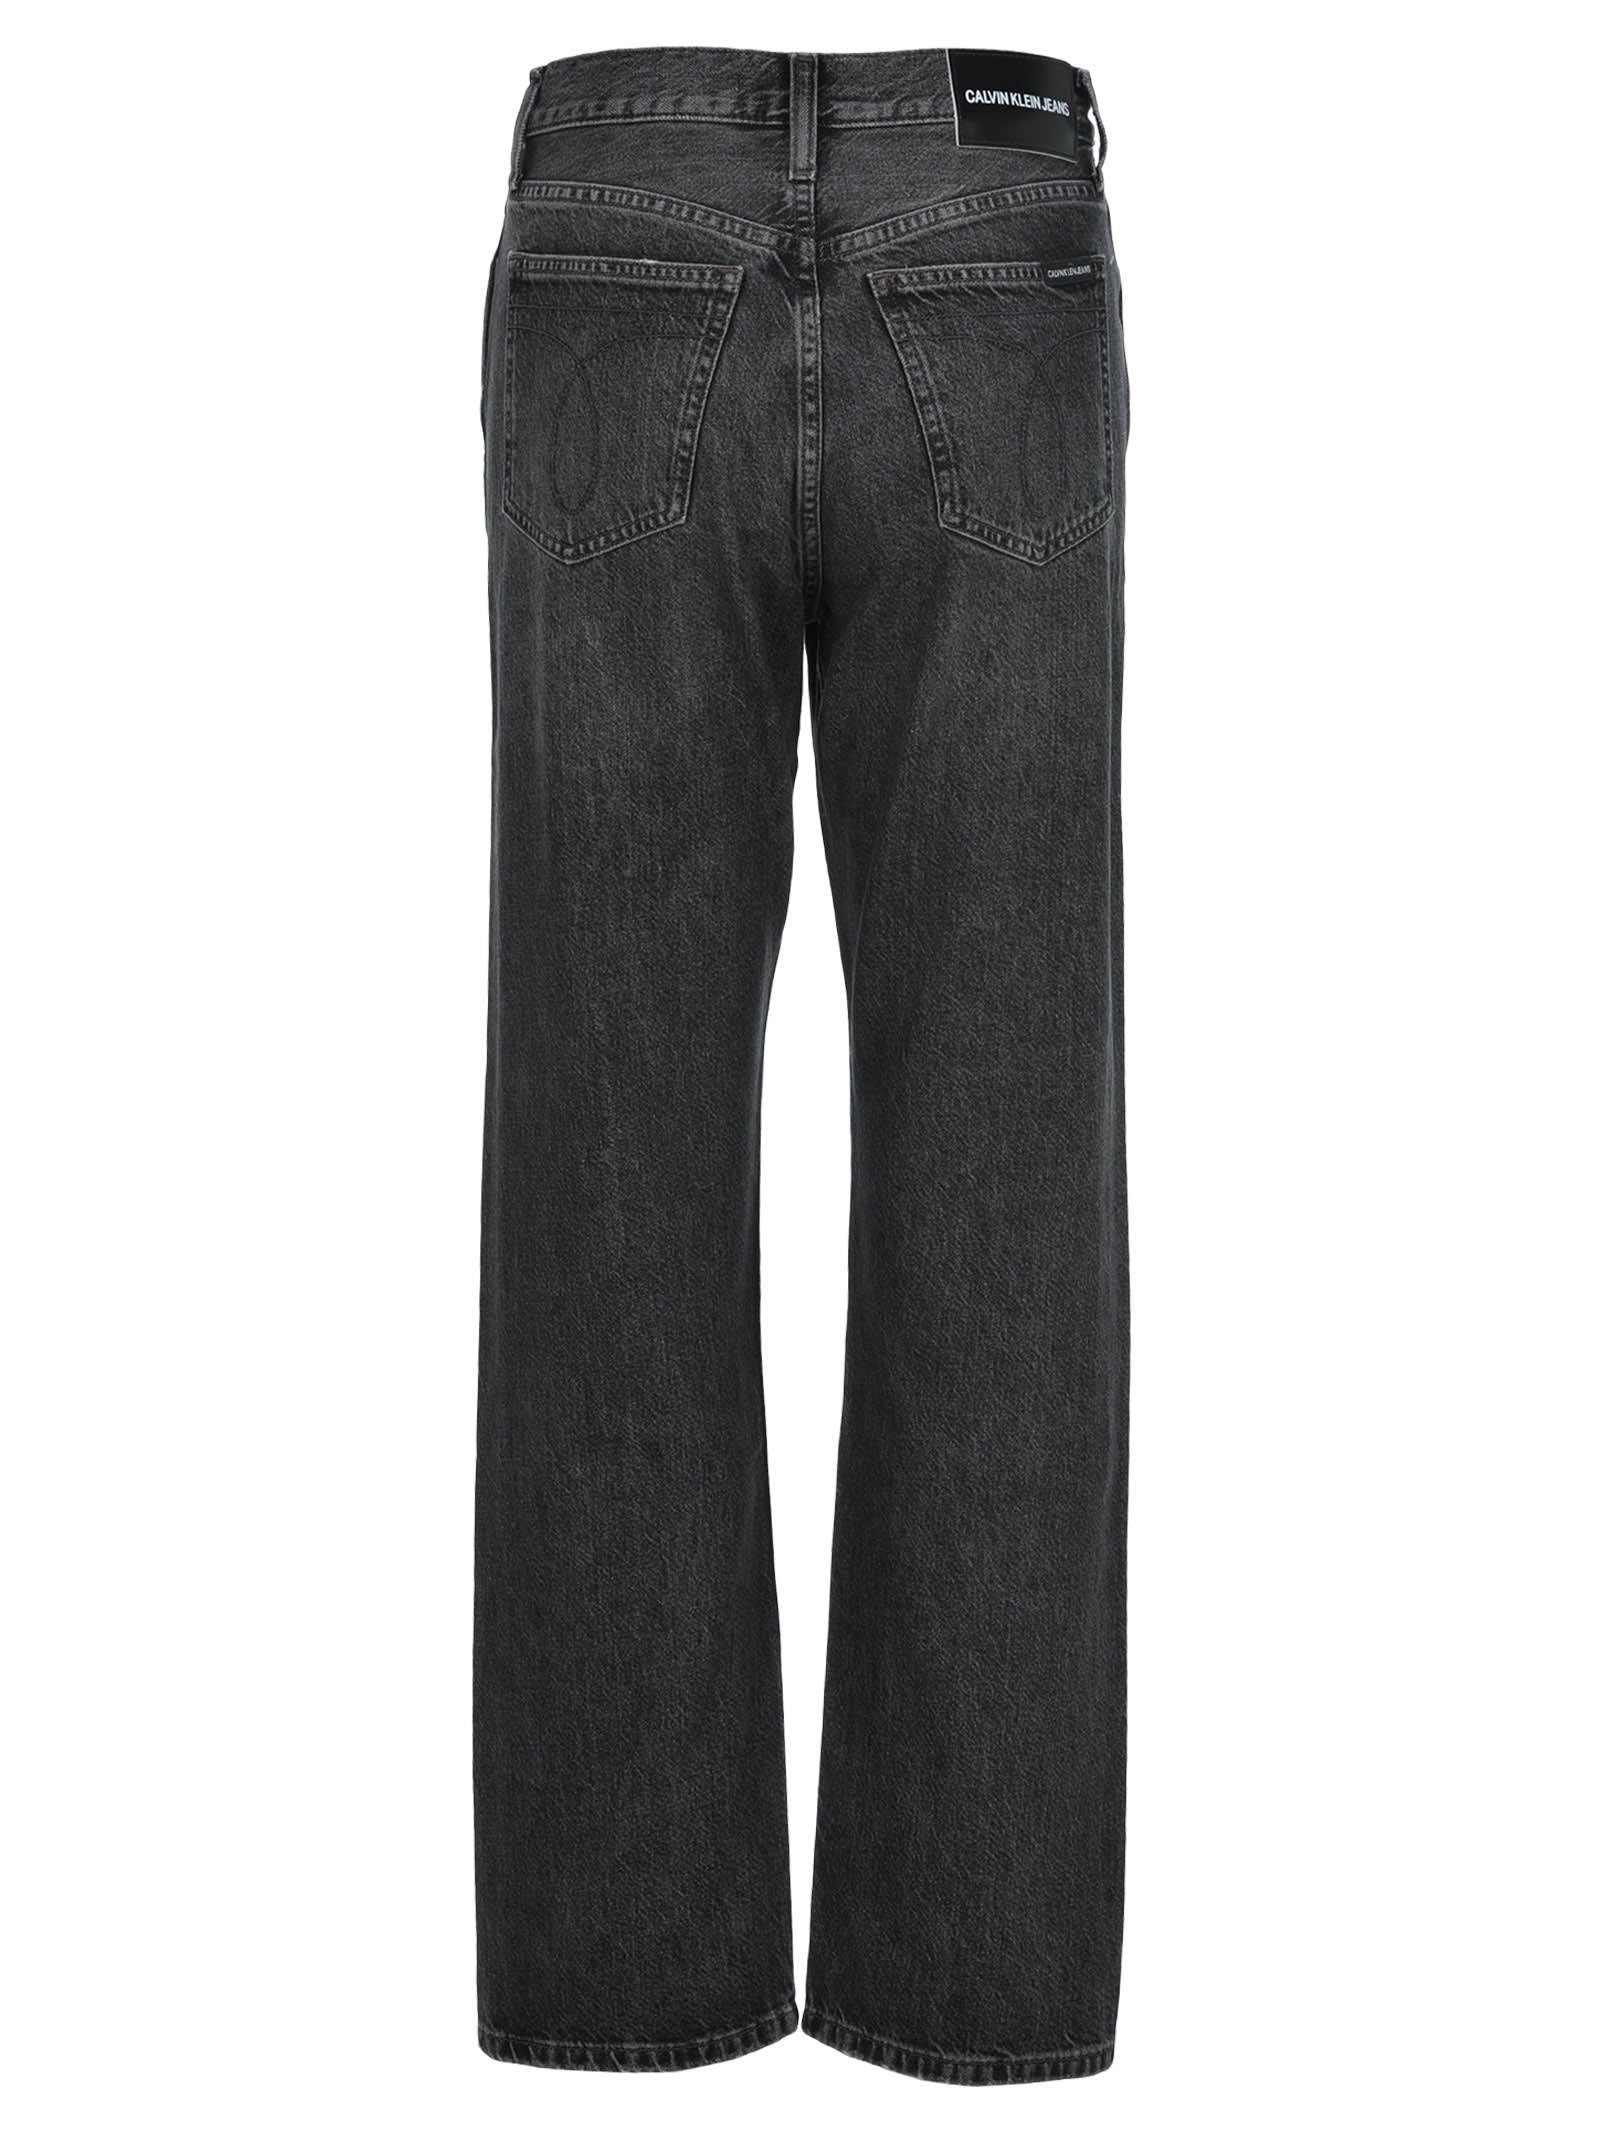 calvin klein jeans pocket design